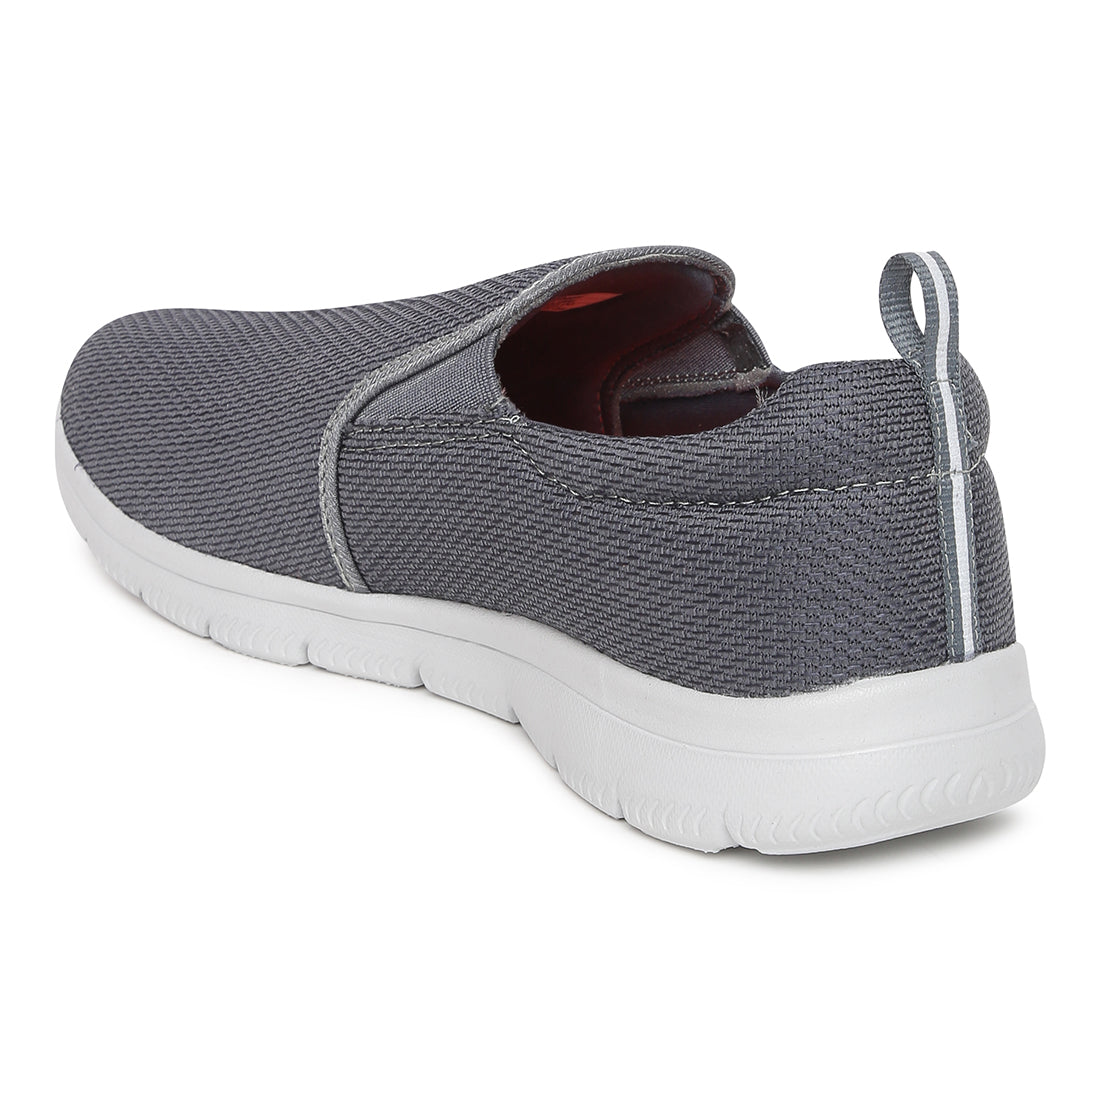 Eeken Dark Grey Athleisure Shoes for Men